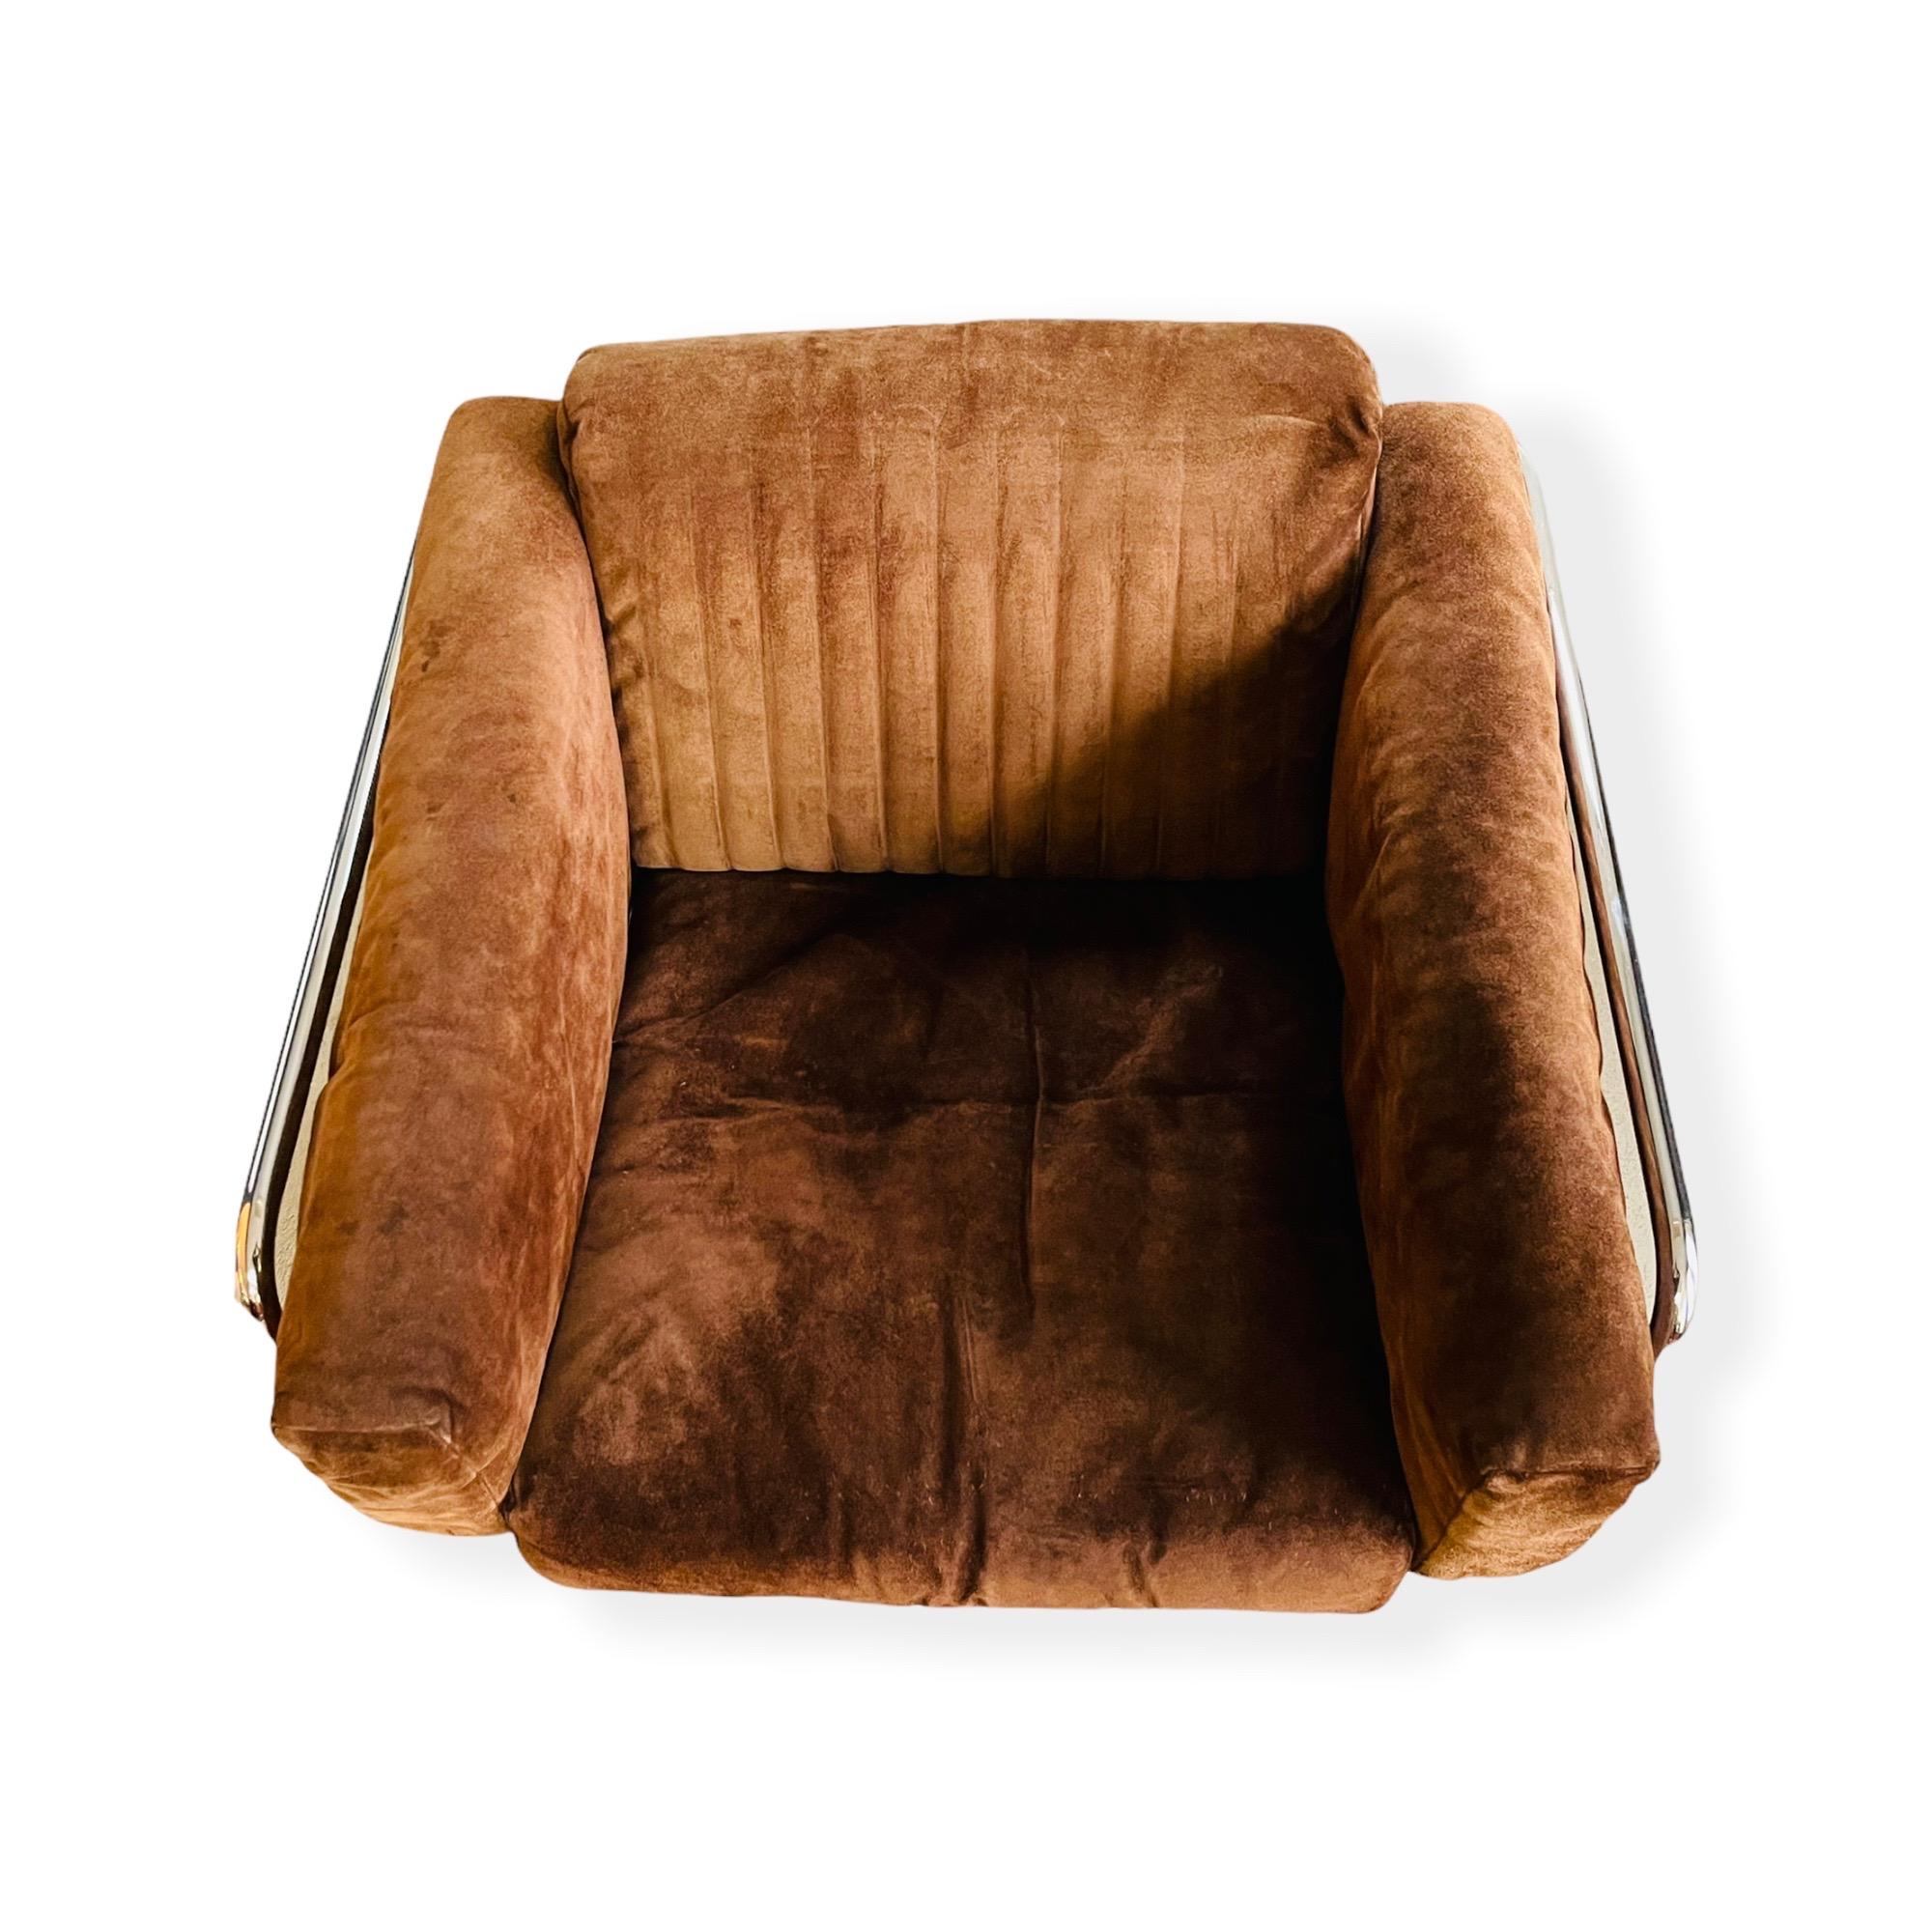 Pair Danish Modern Chrome Lounge Chairs by Hans Eichenberger 1